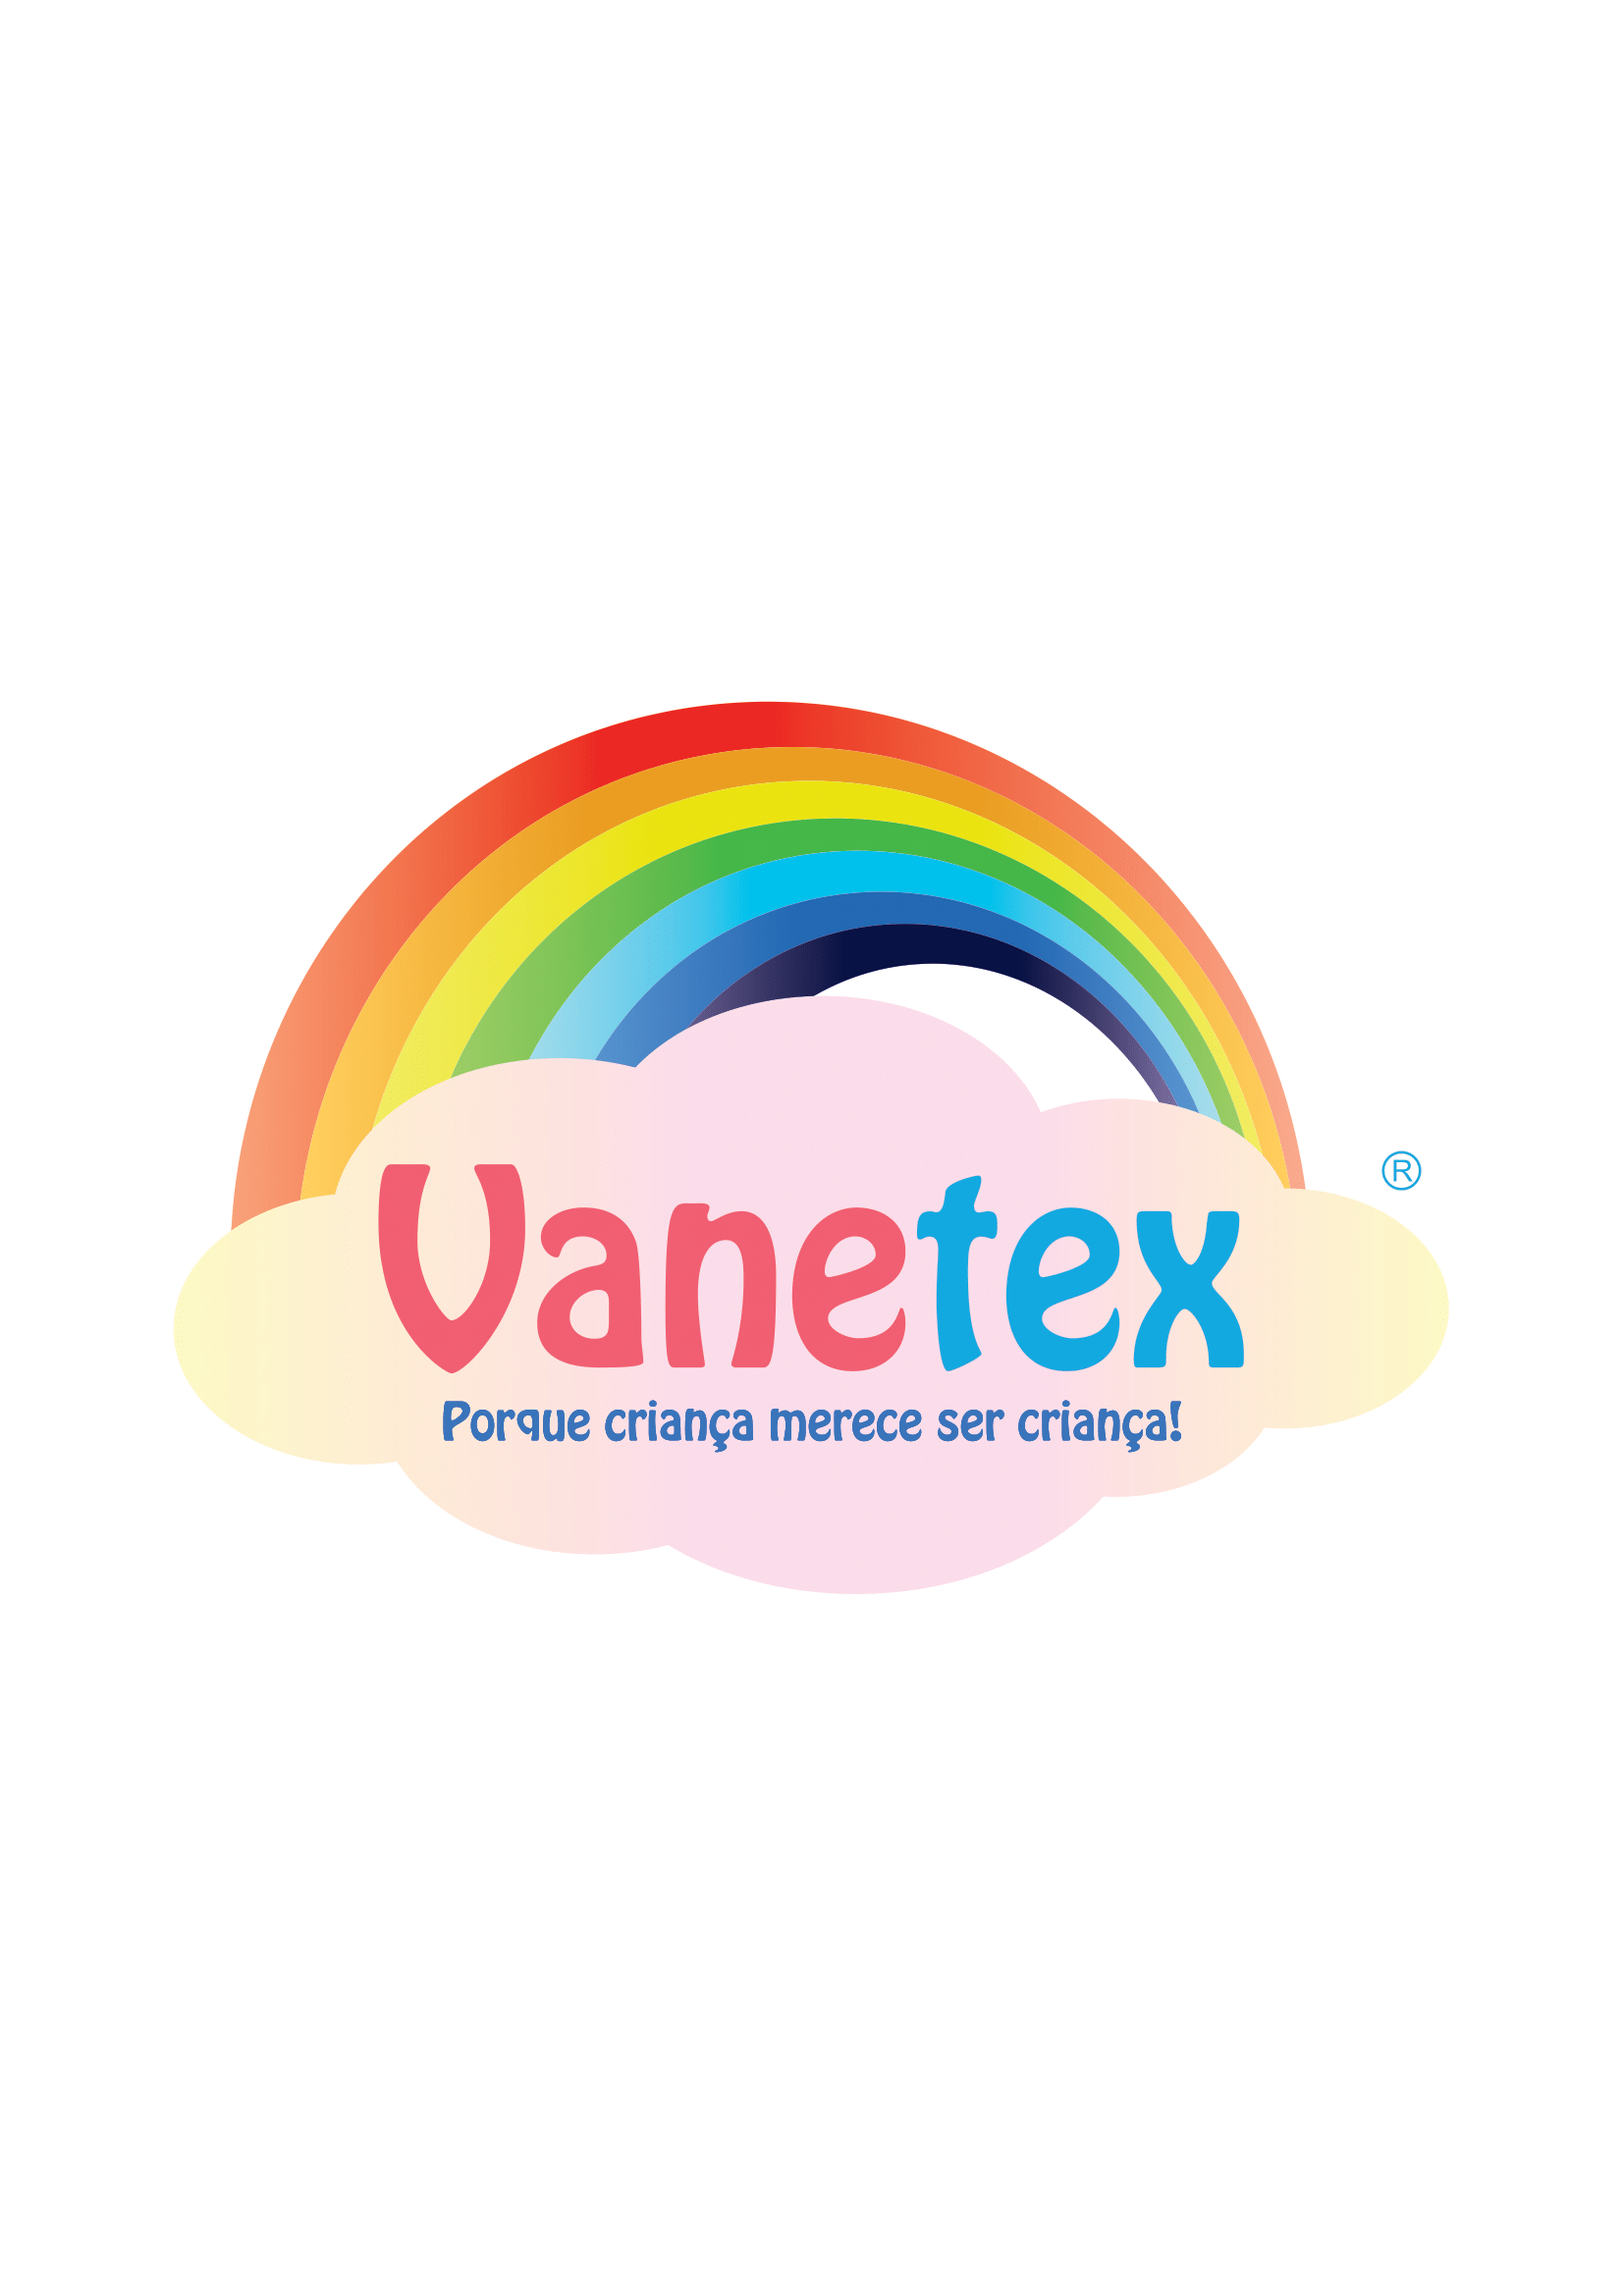 Logotipo Vanetex